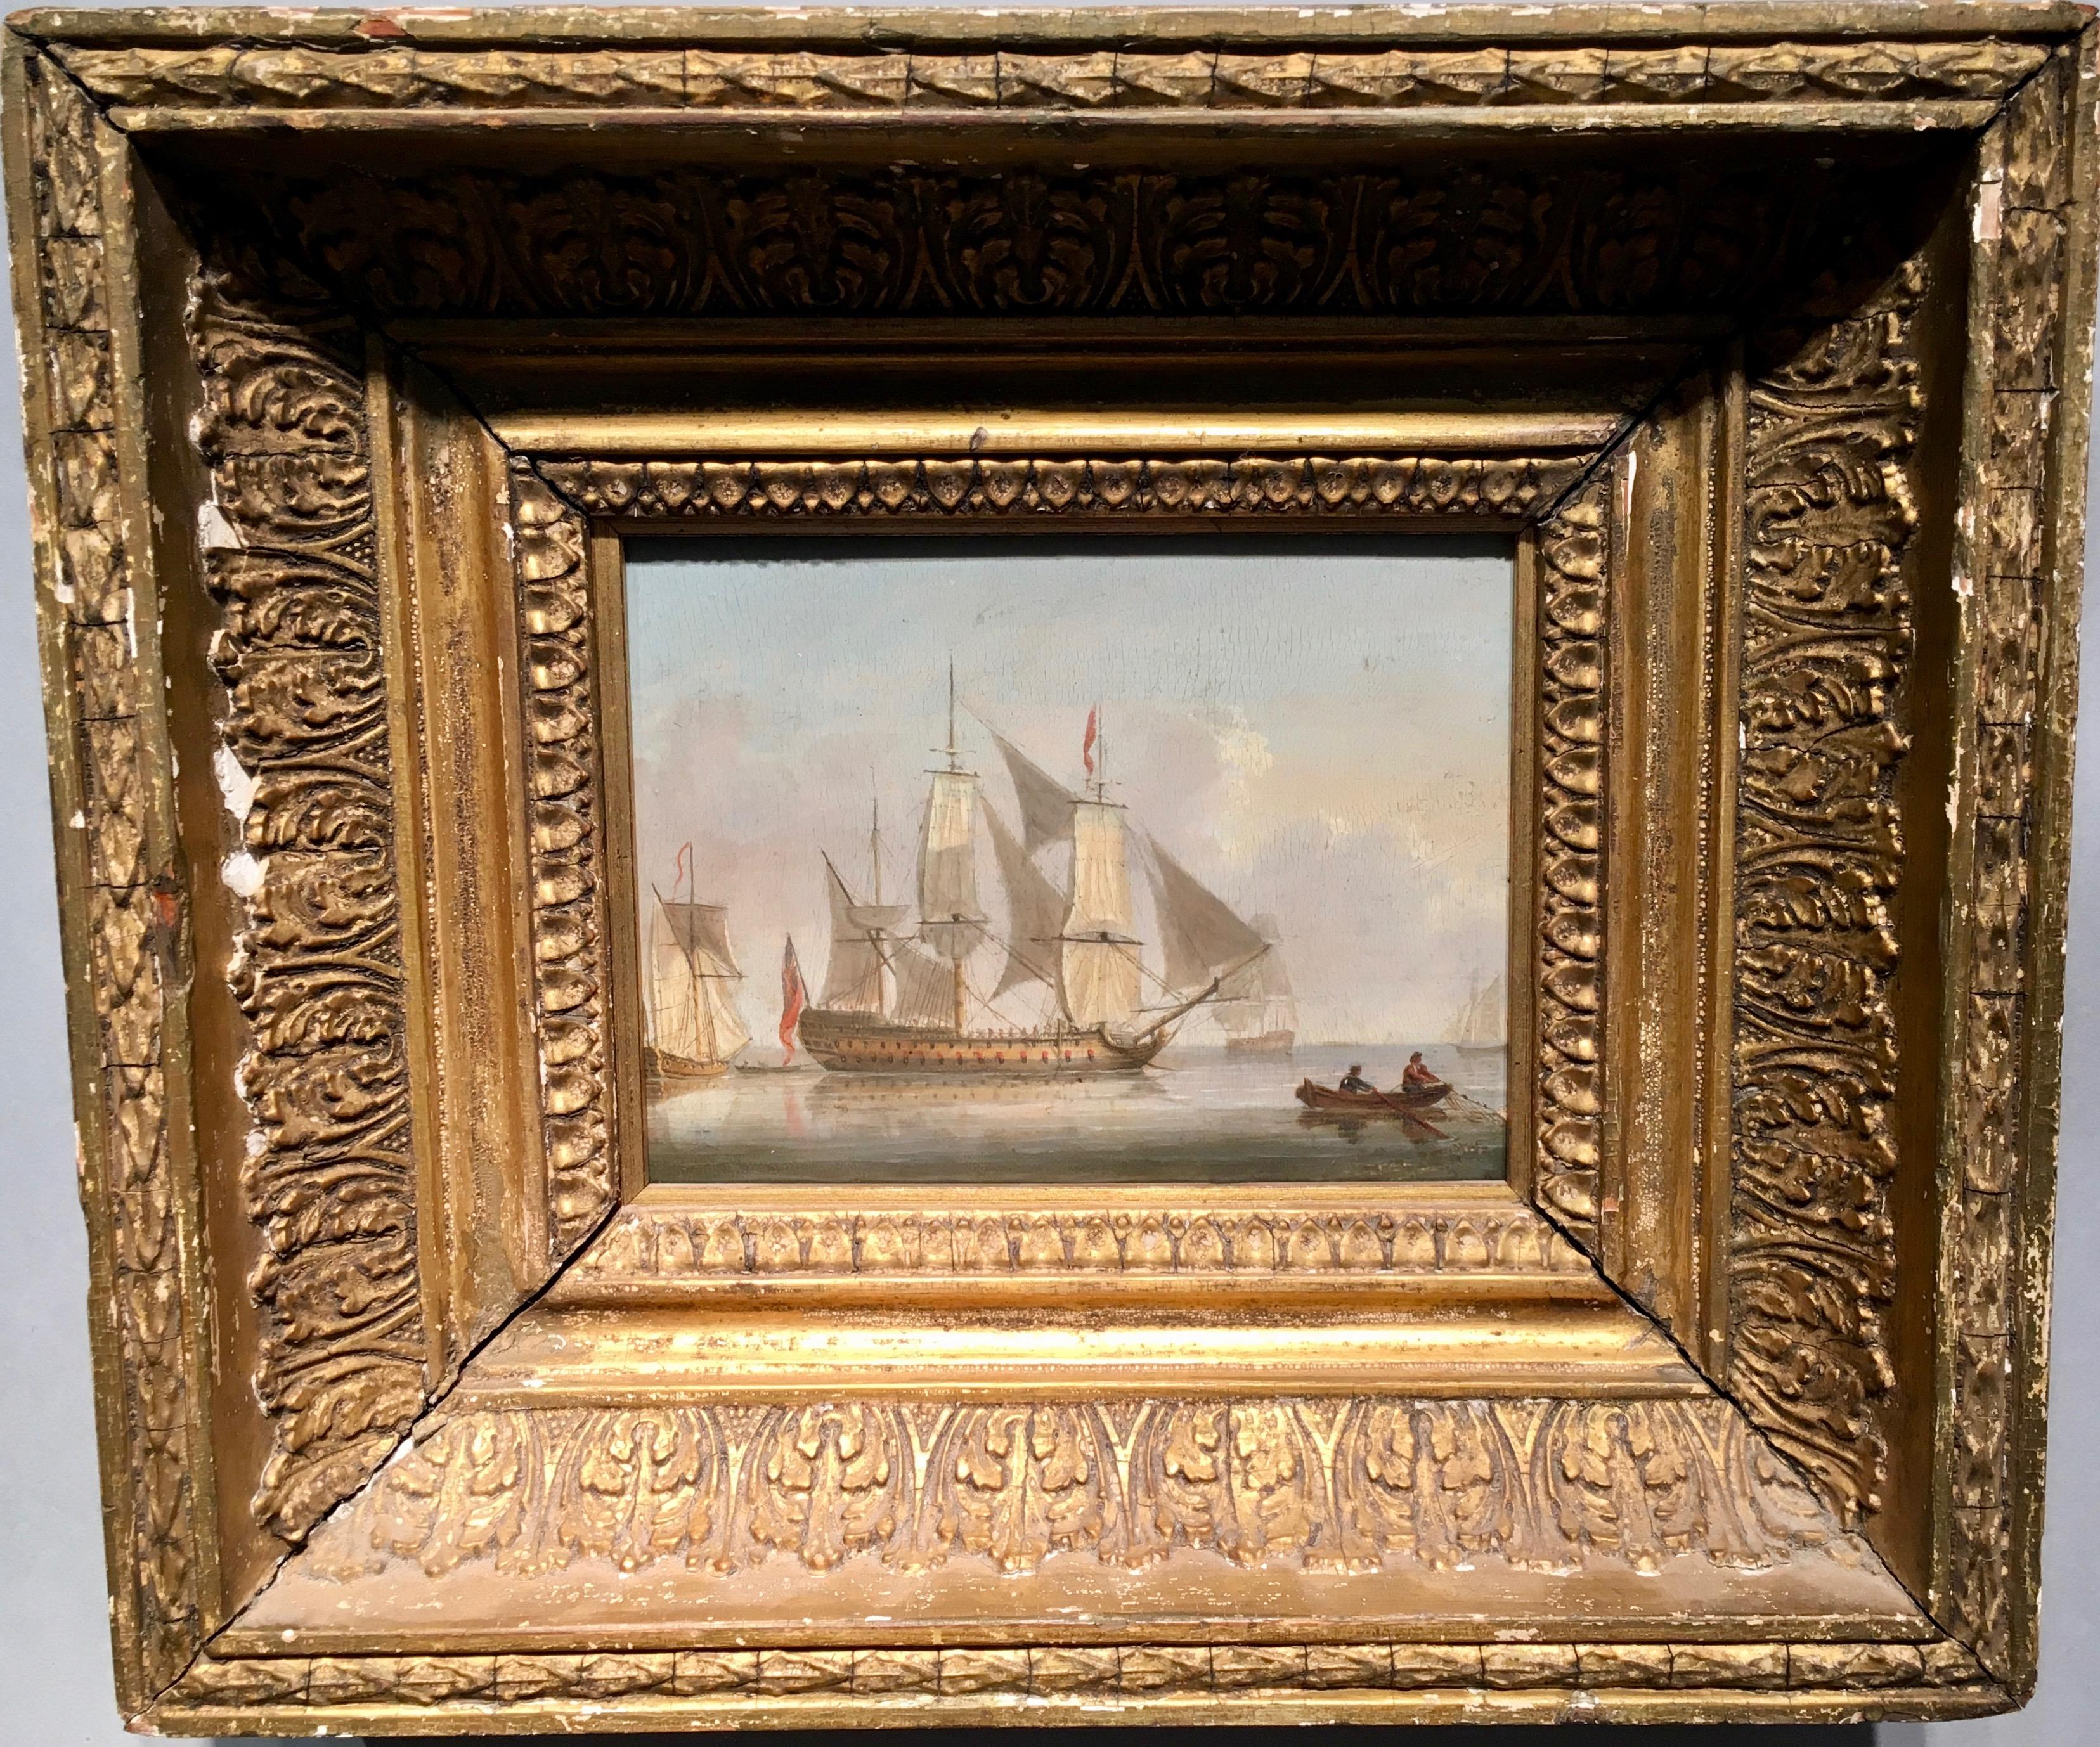 Thomas Luny Figurative Painting - Early 19th century Georgian or Regency English warship off the English coast  